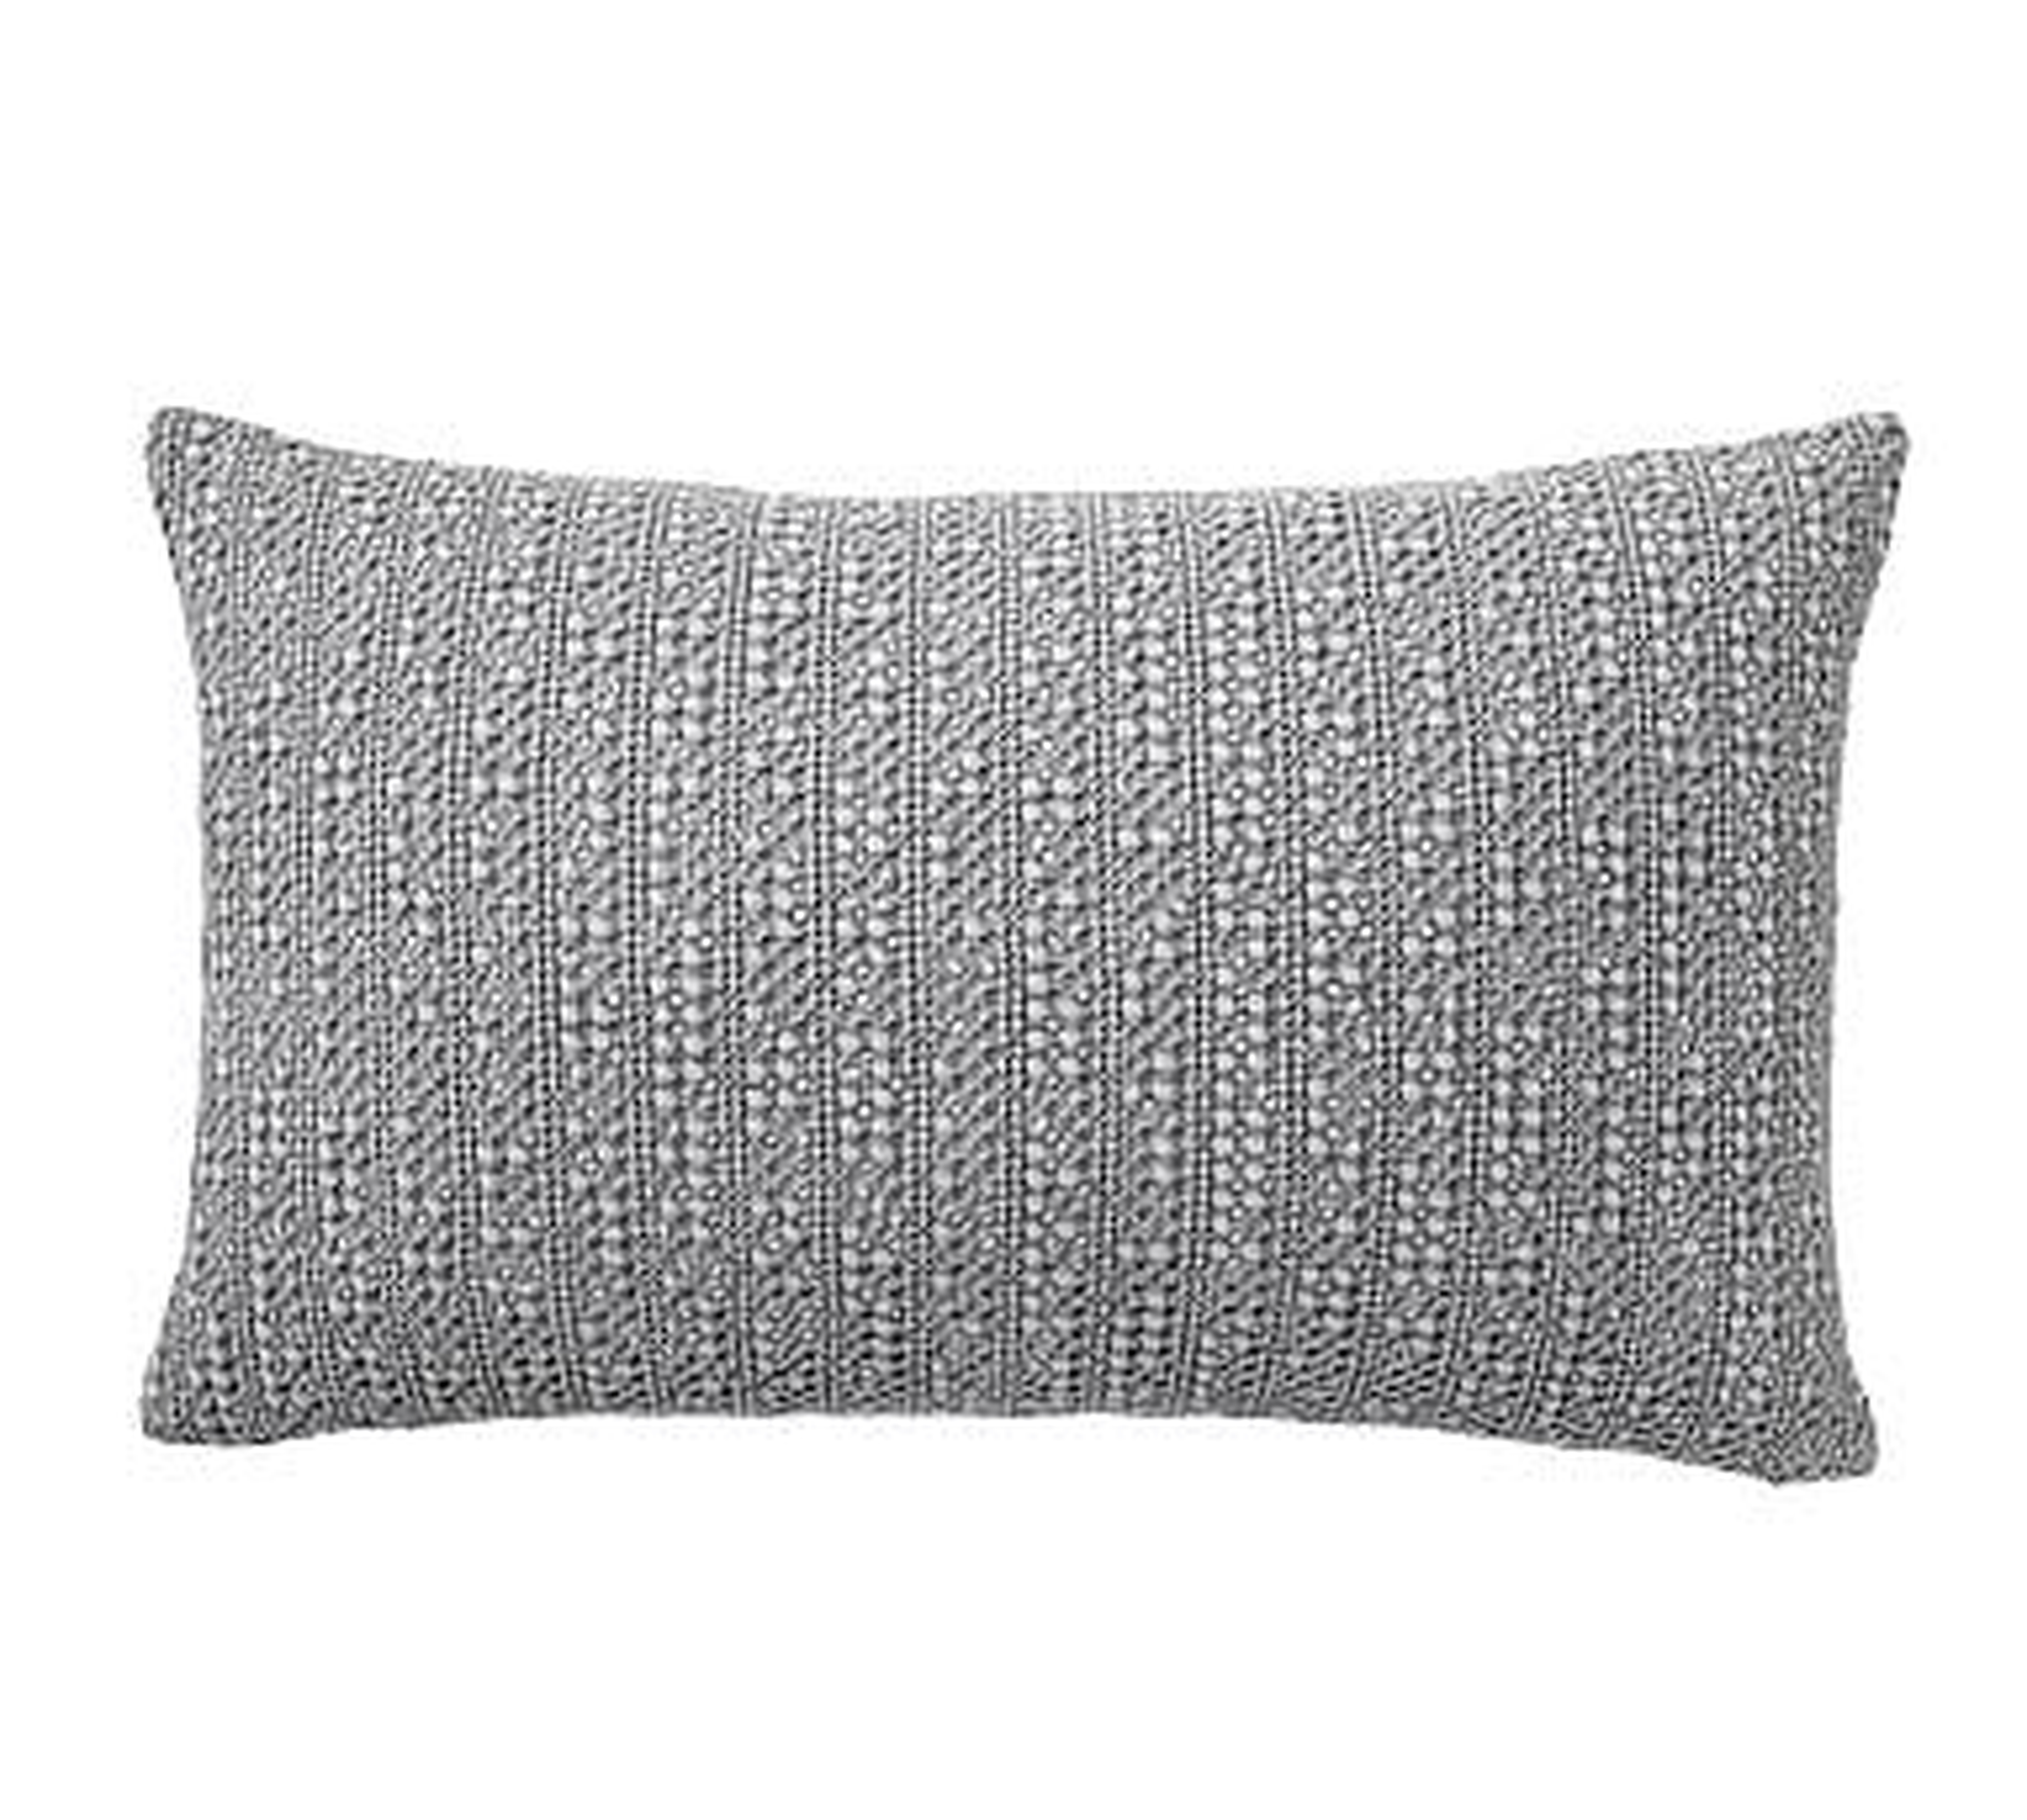 Honeycomb Lumbar Pillow Cover, 16 x 26", Flagstone - Pottery Barn